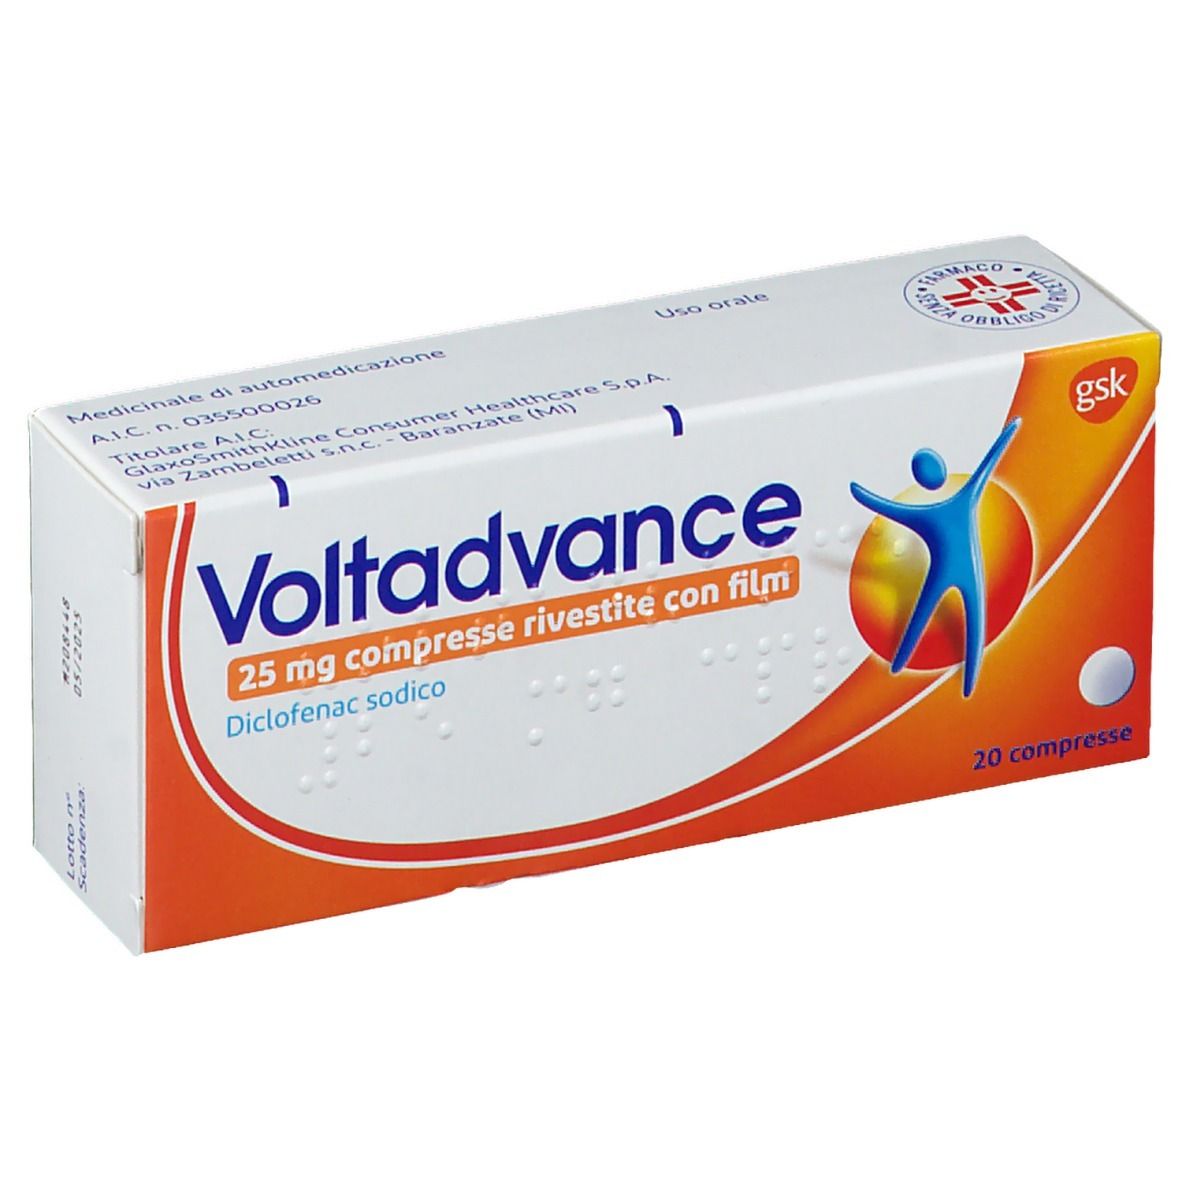 Voltadvance 25 mg 20 Compresse Rivestite